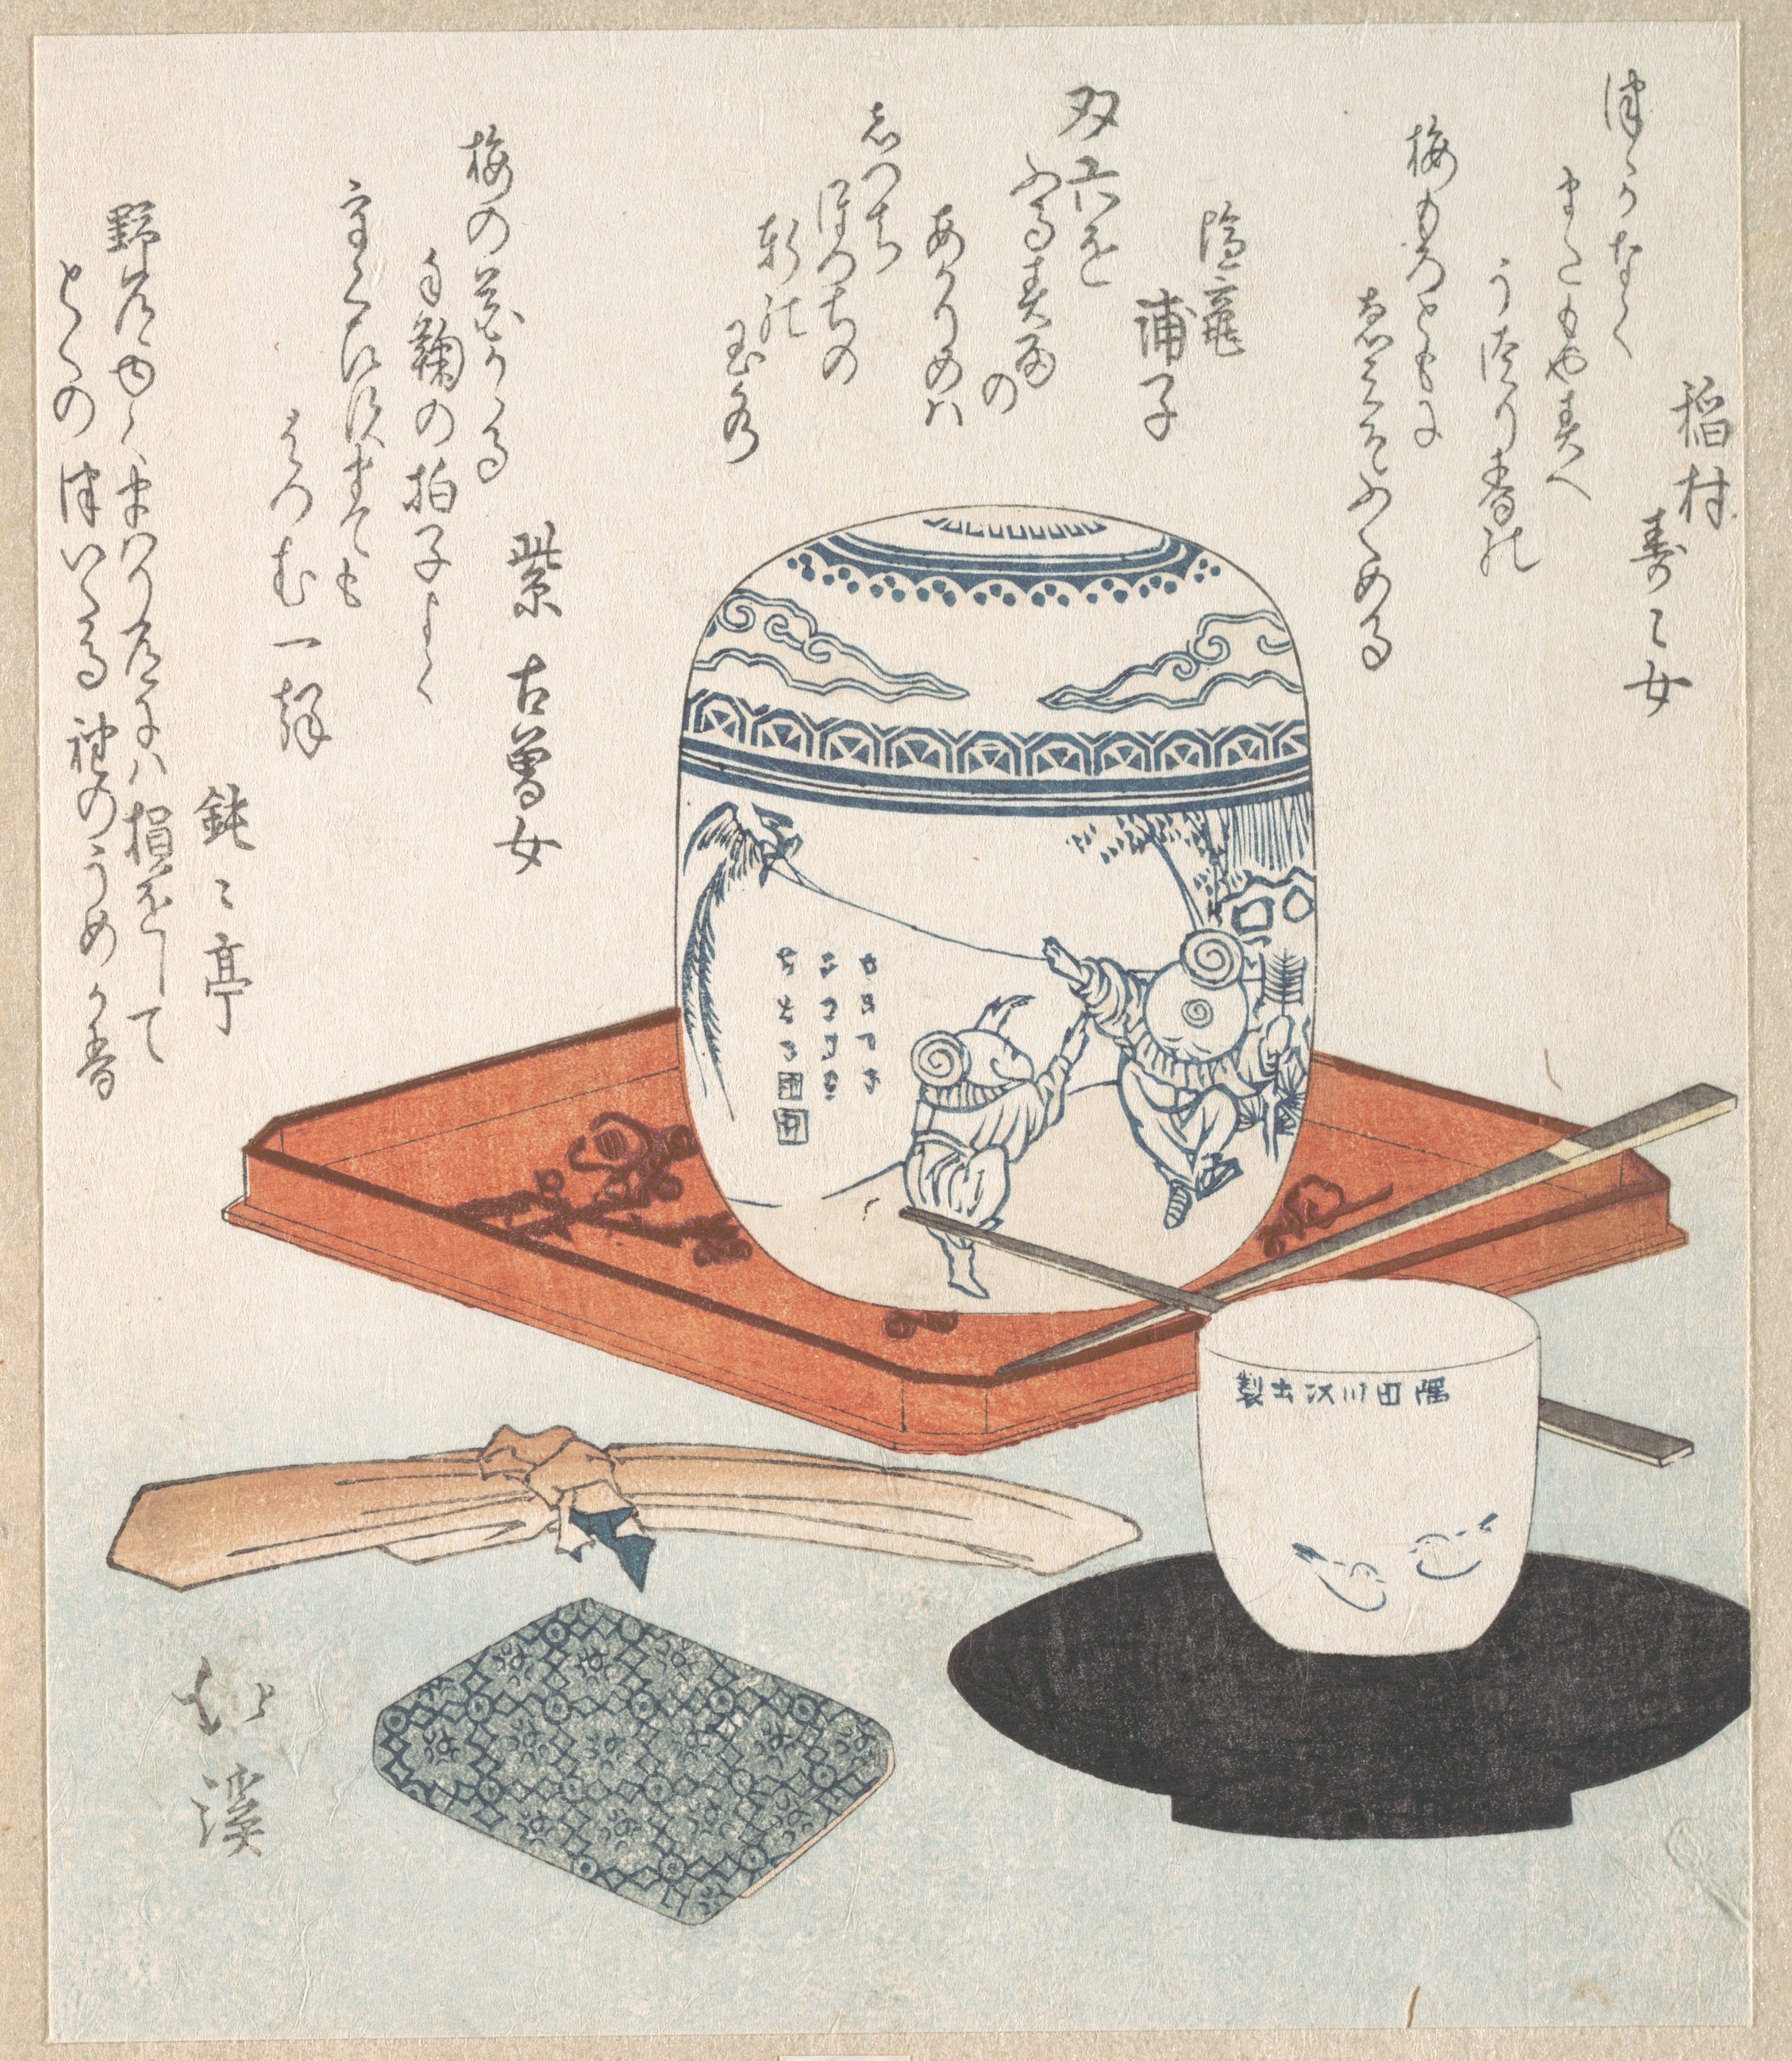 Cosas de té by Totoya Hokkei - Siglo XIX - 19,7 x 16,7 cm Museo Metropolitano de Arte